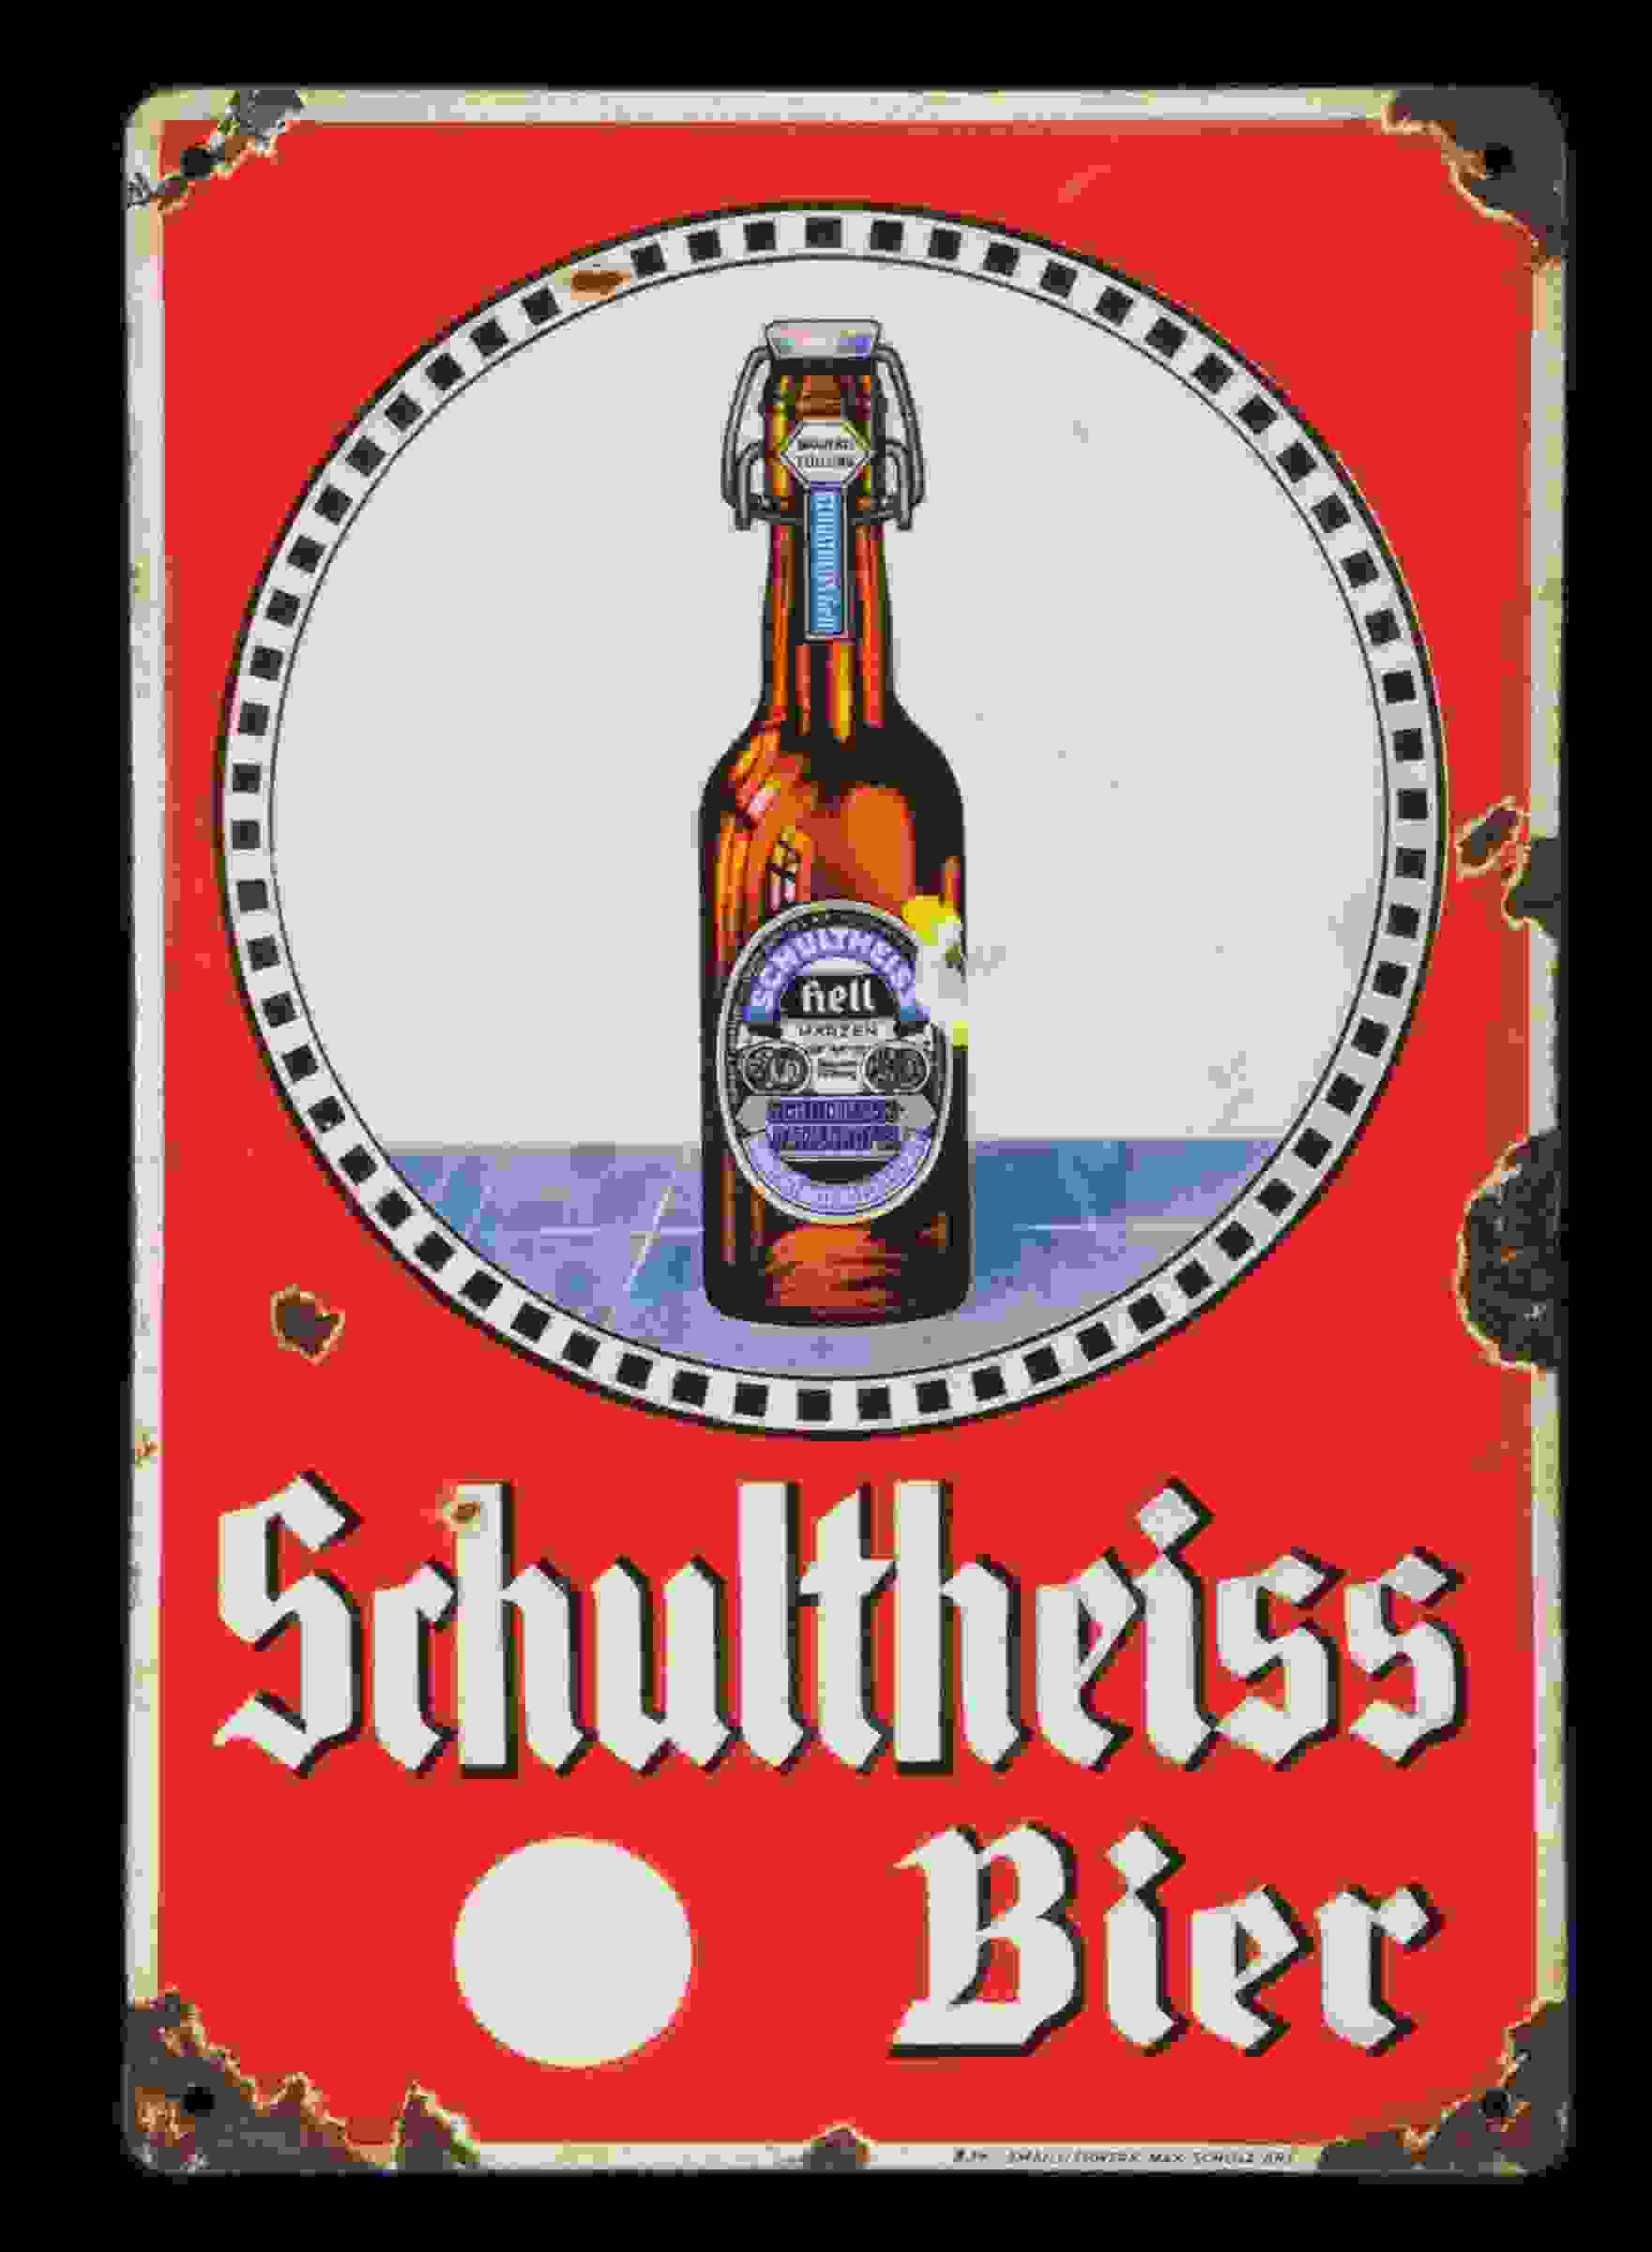 Schultheiss Bier 